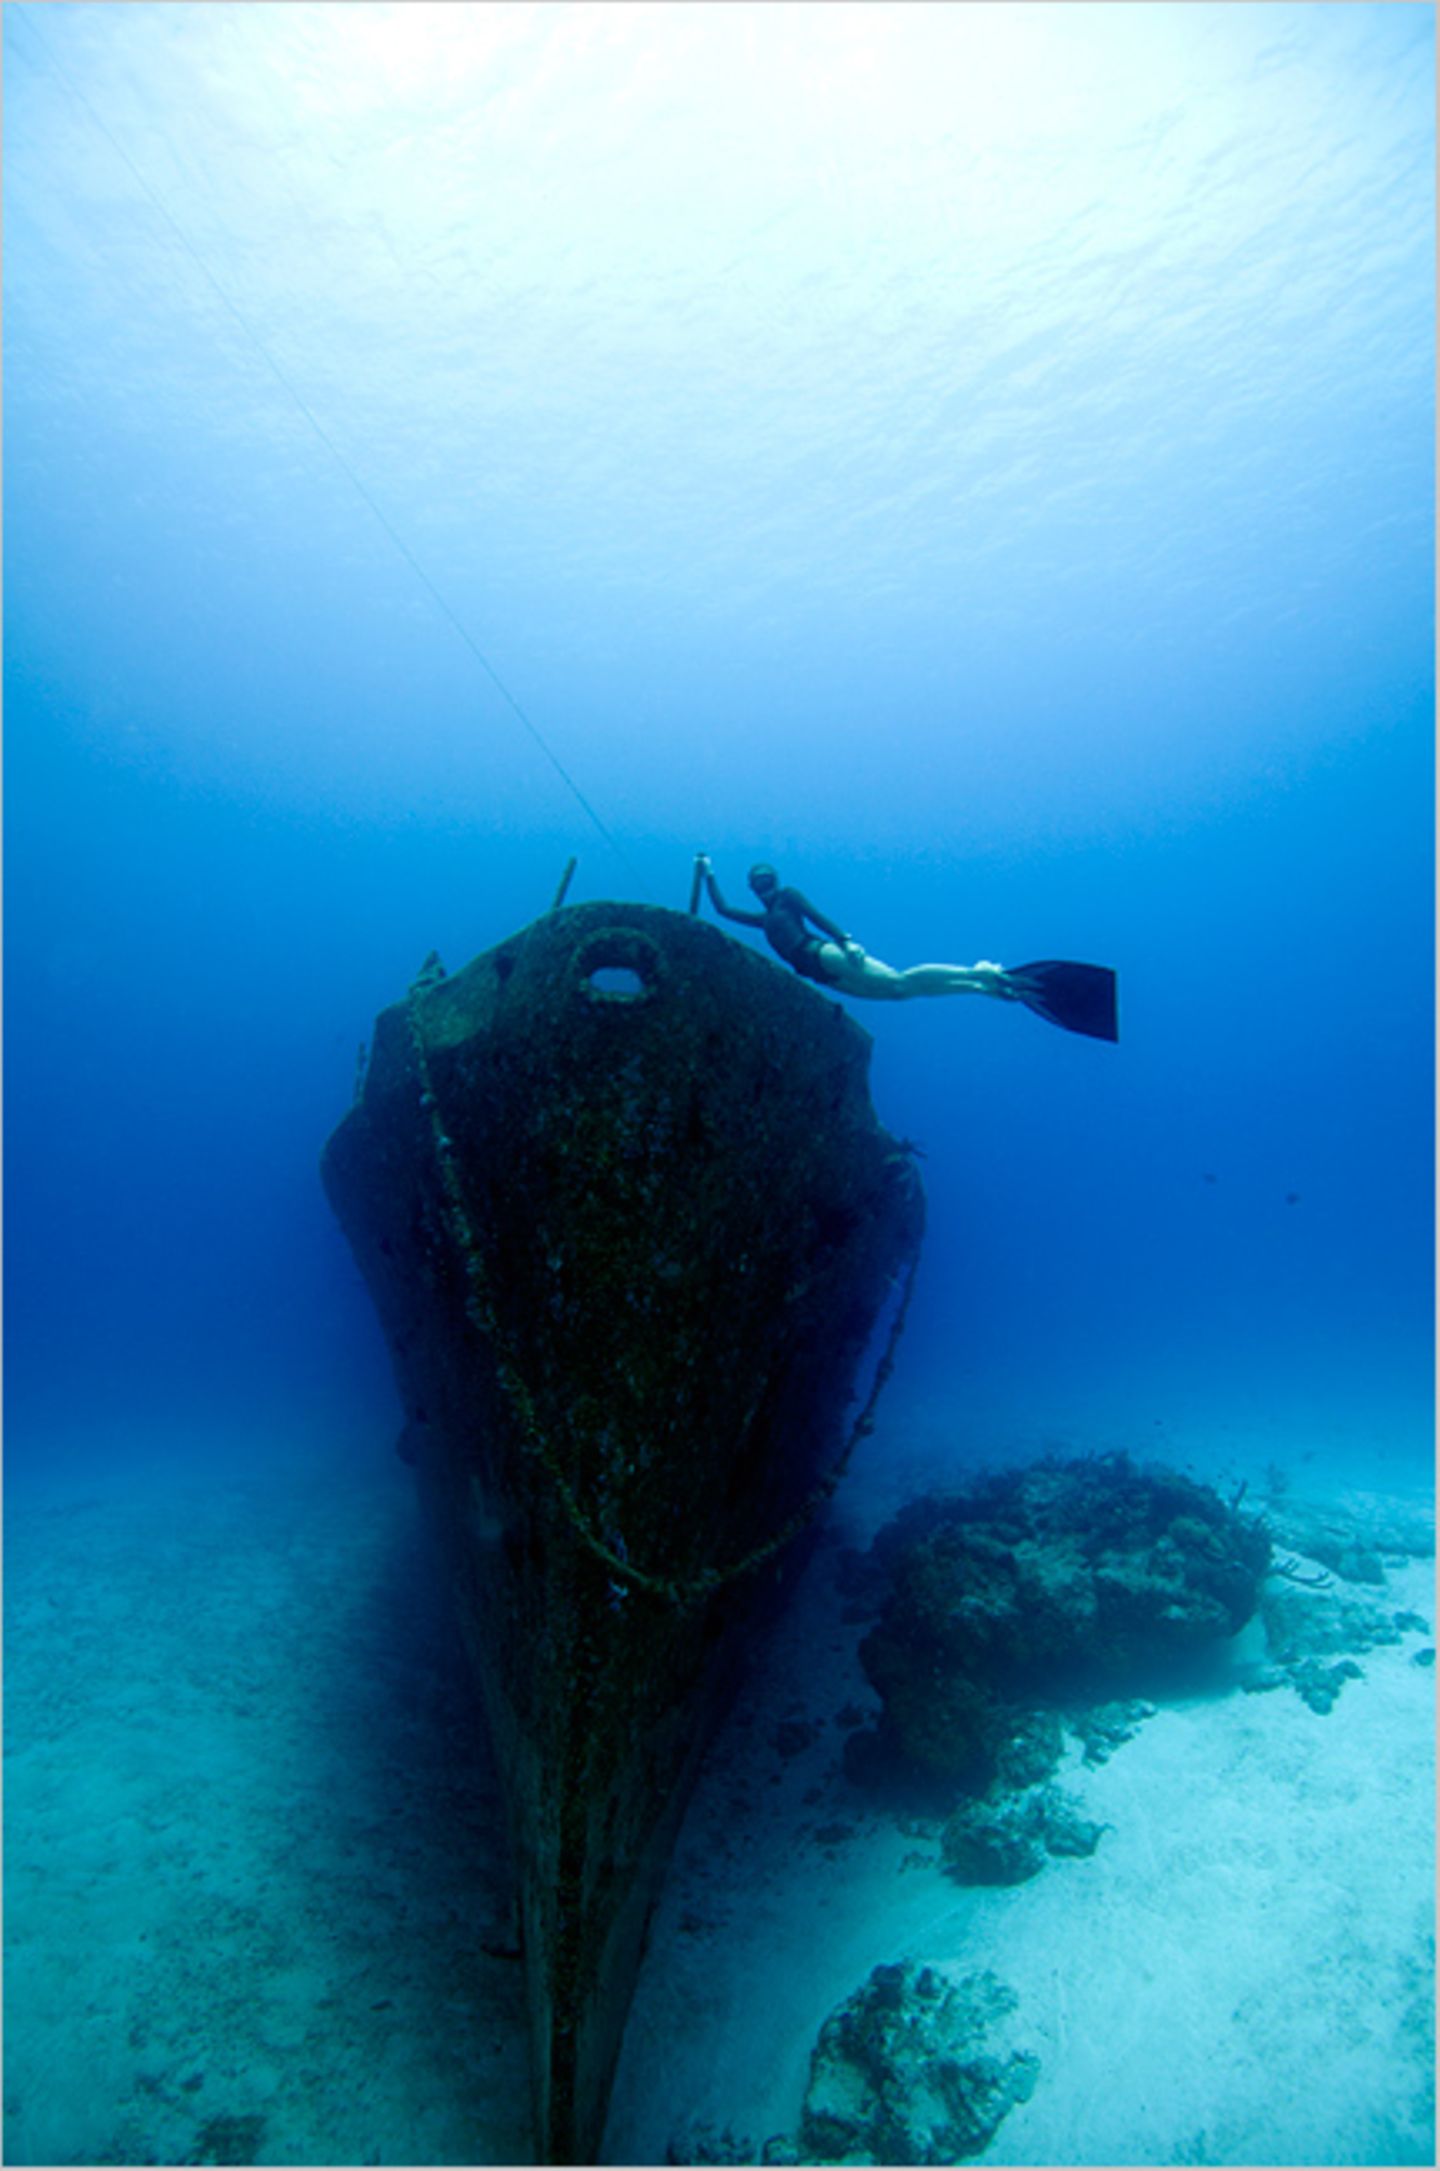 Apnoe-Tauchen: "Freediven fördert die mentale Stärke" - Bild 3